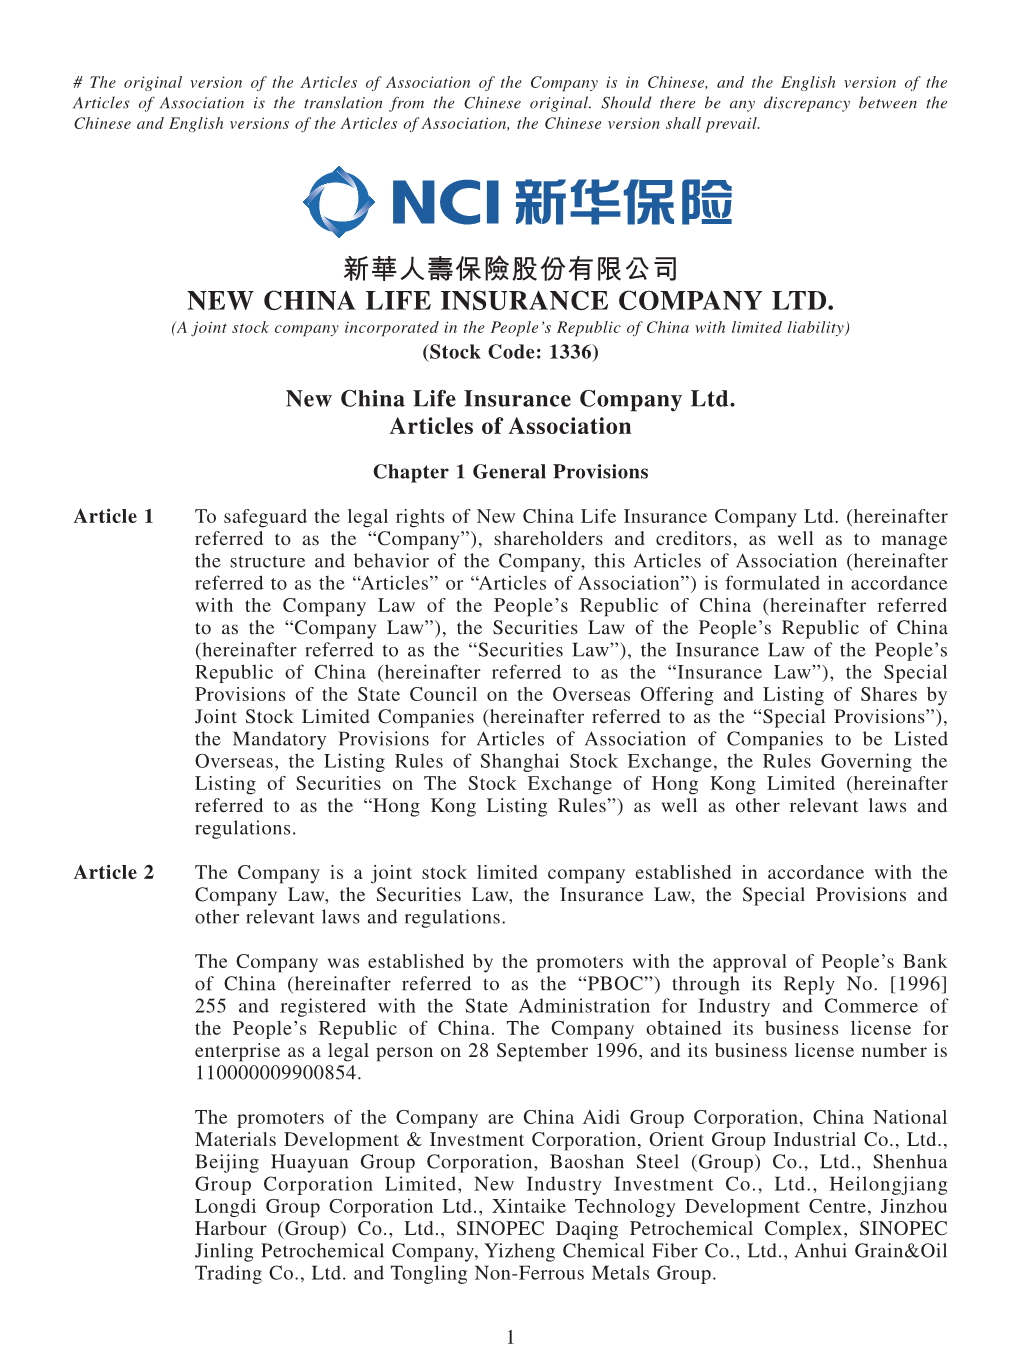 新華人壽保險股份有限公司 New China Life Insurance Company Ltd